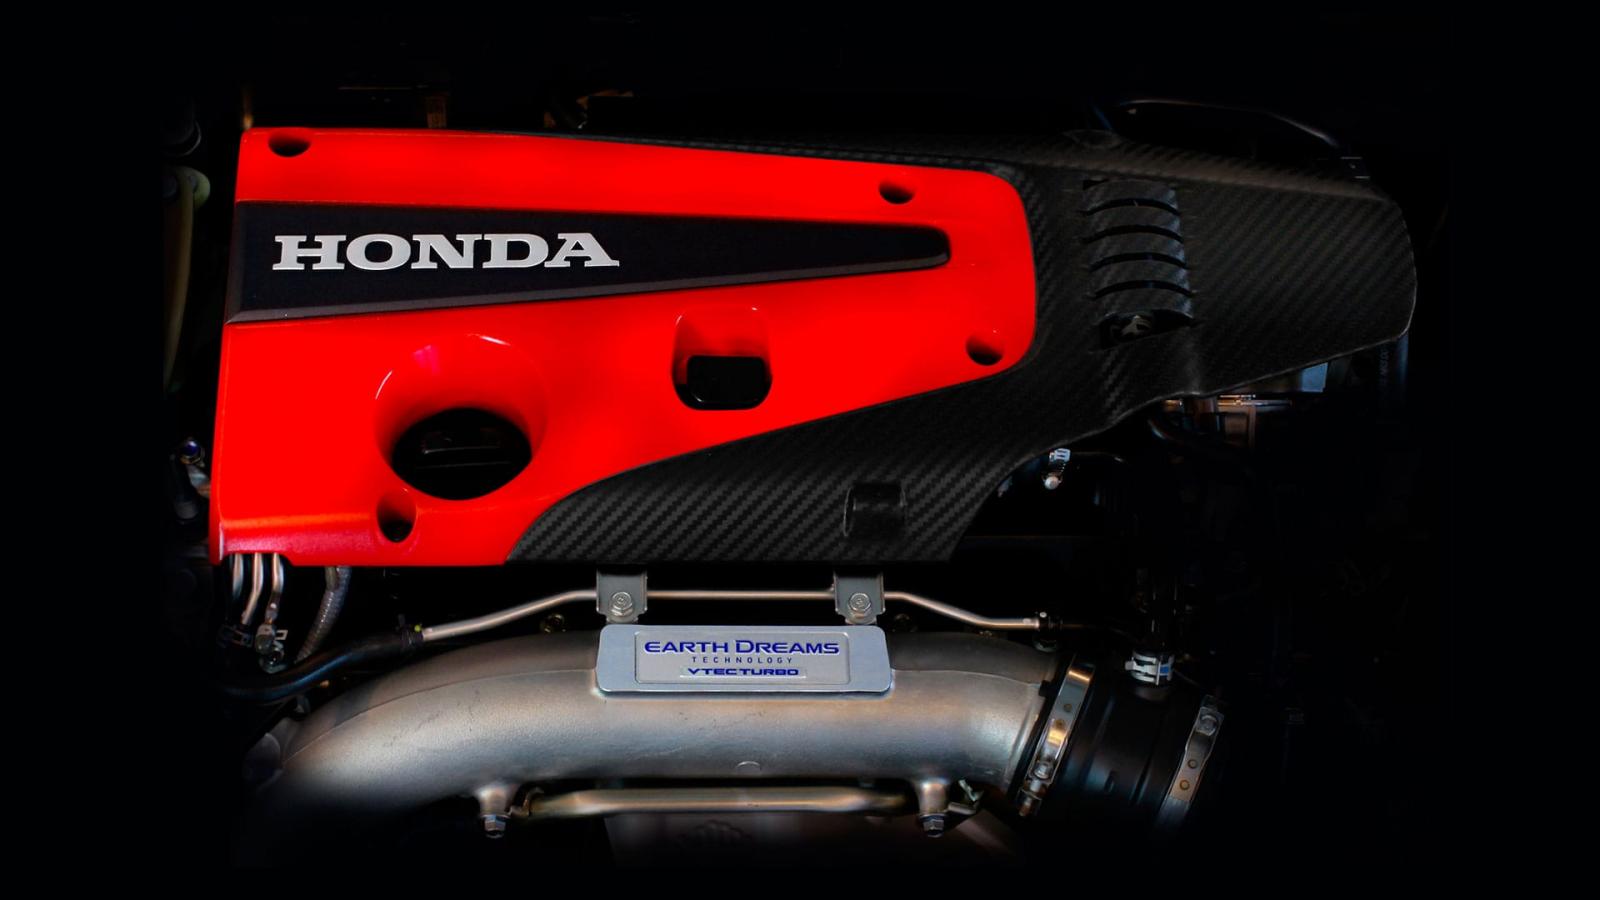 Honda Civic type R engine